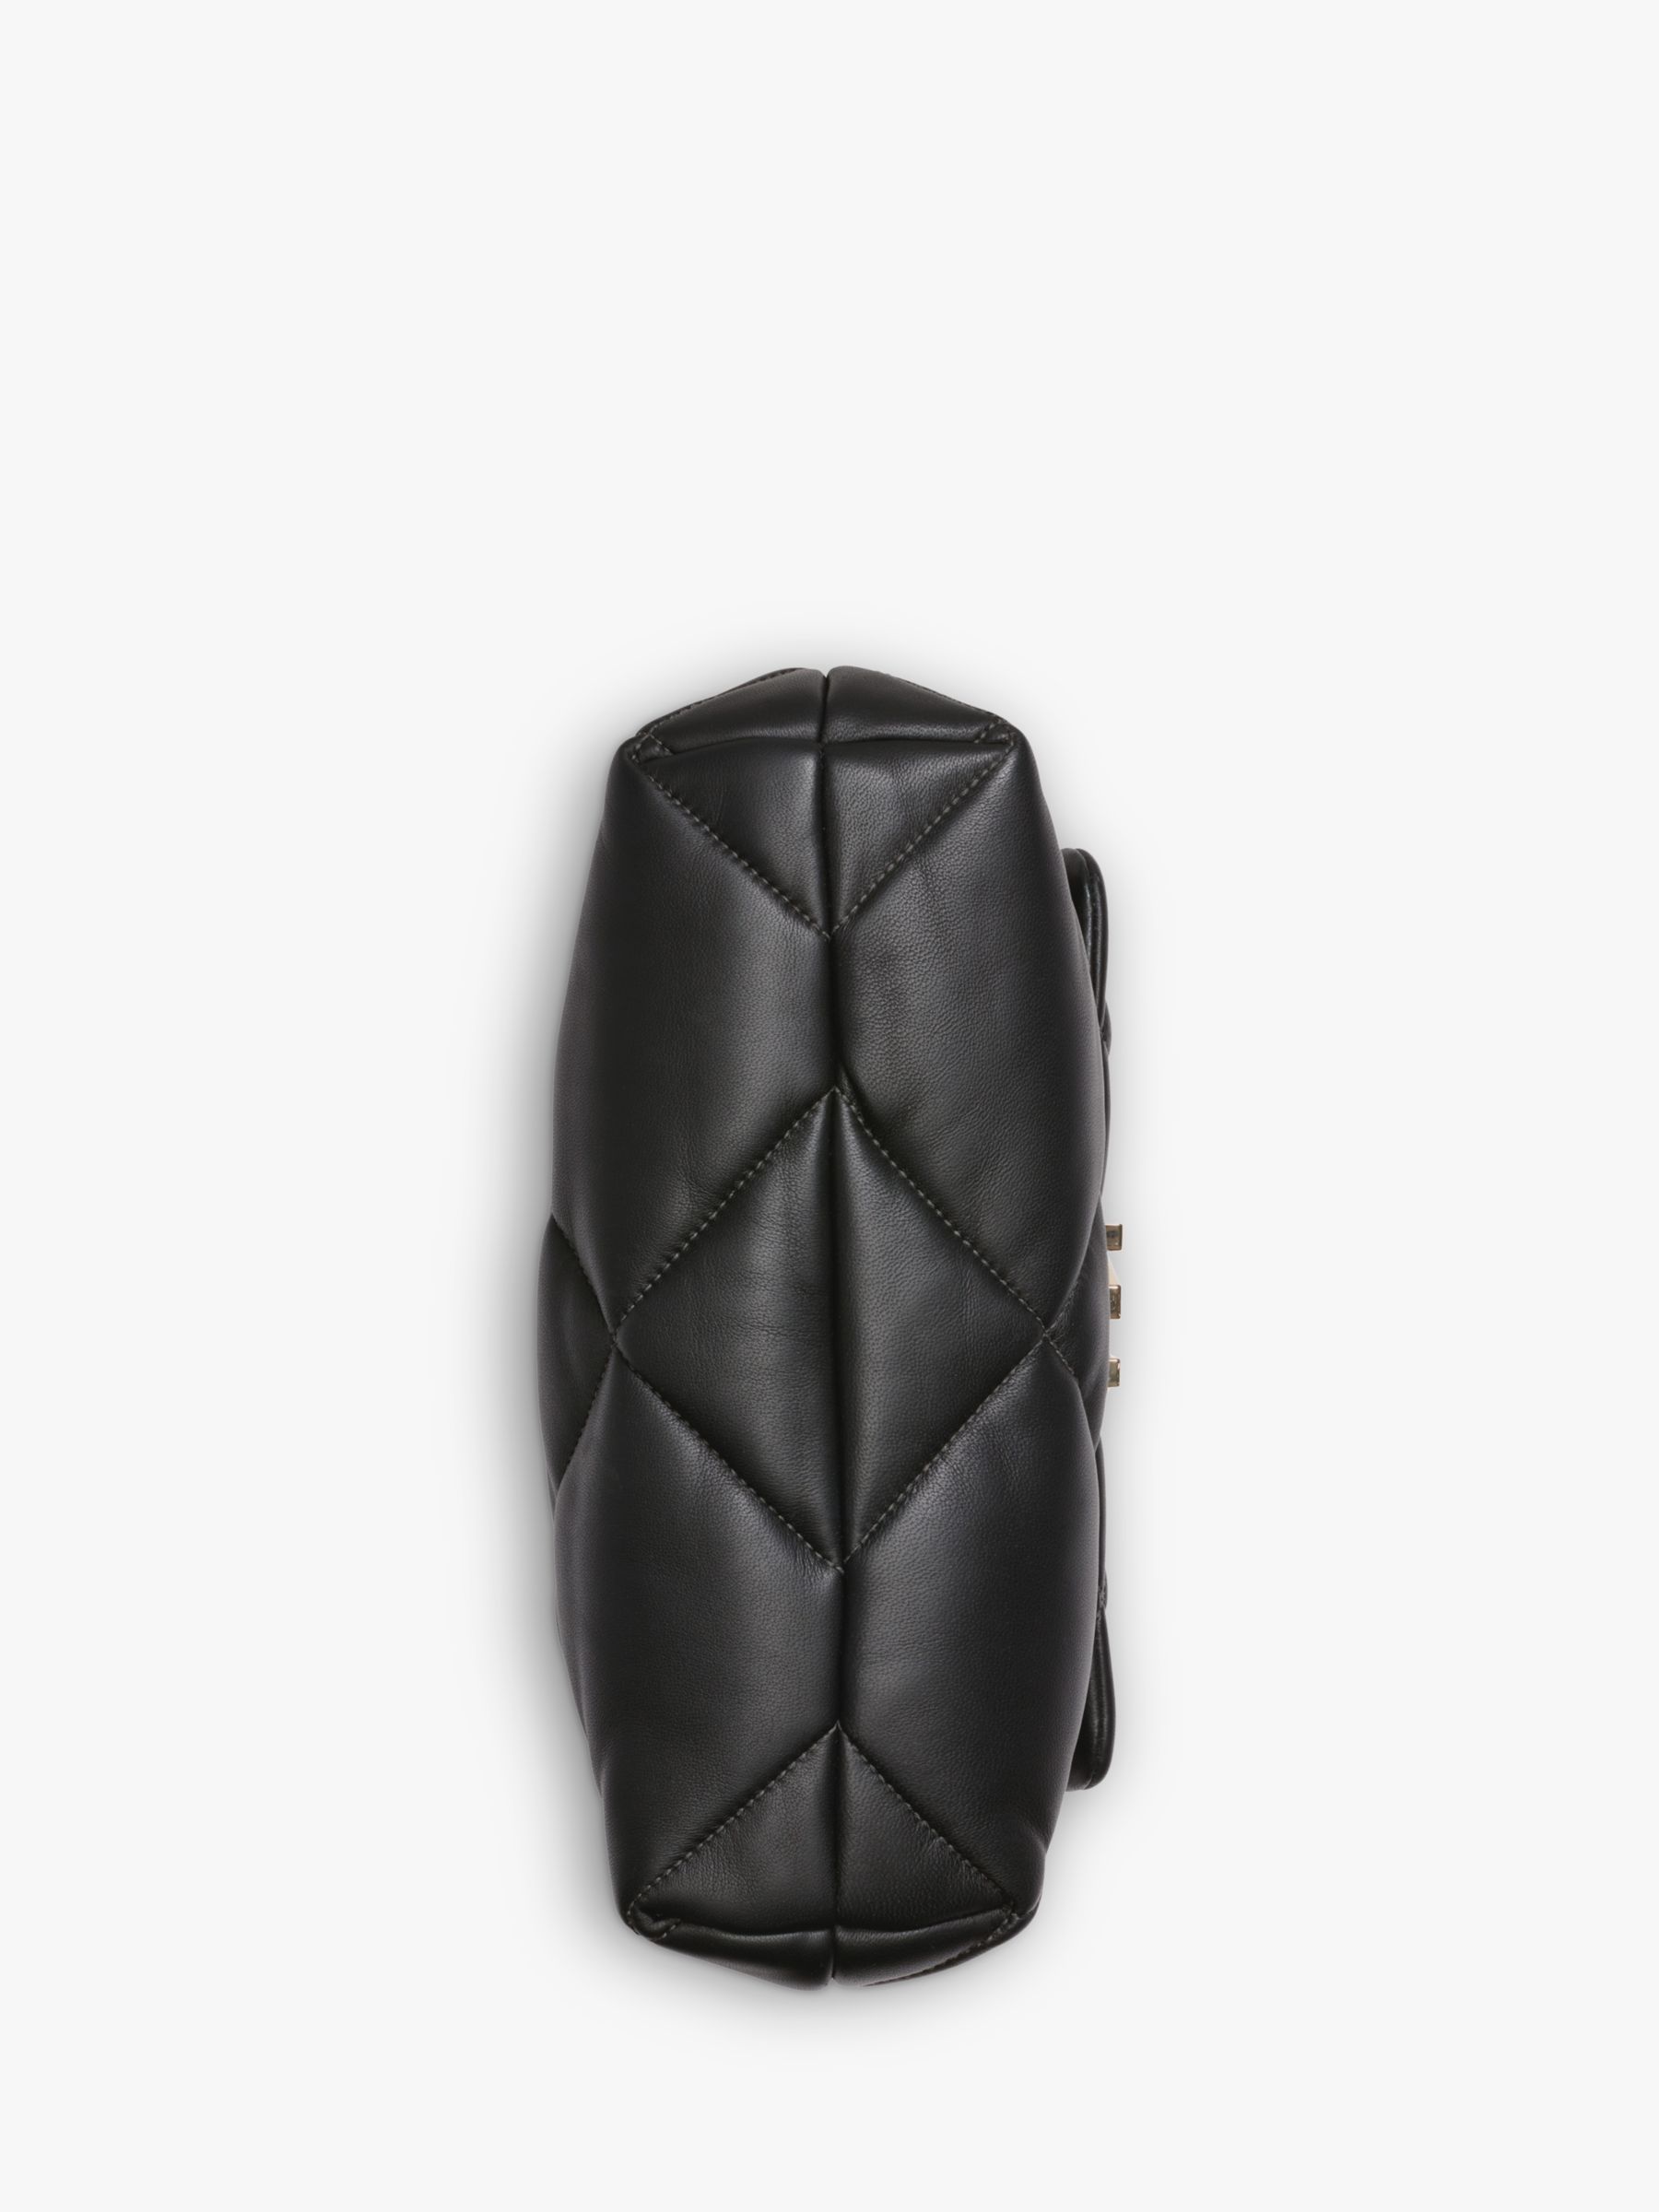 Buy DKNY Red Hook Leather Crossbody Bag, Black/Gold Online at johnlewis.com